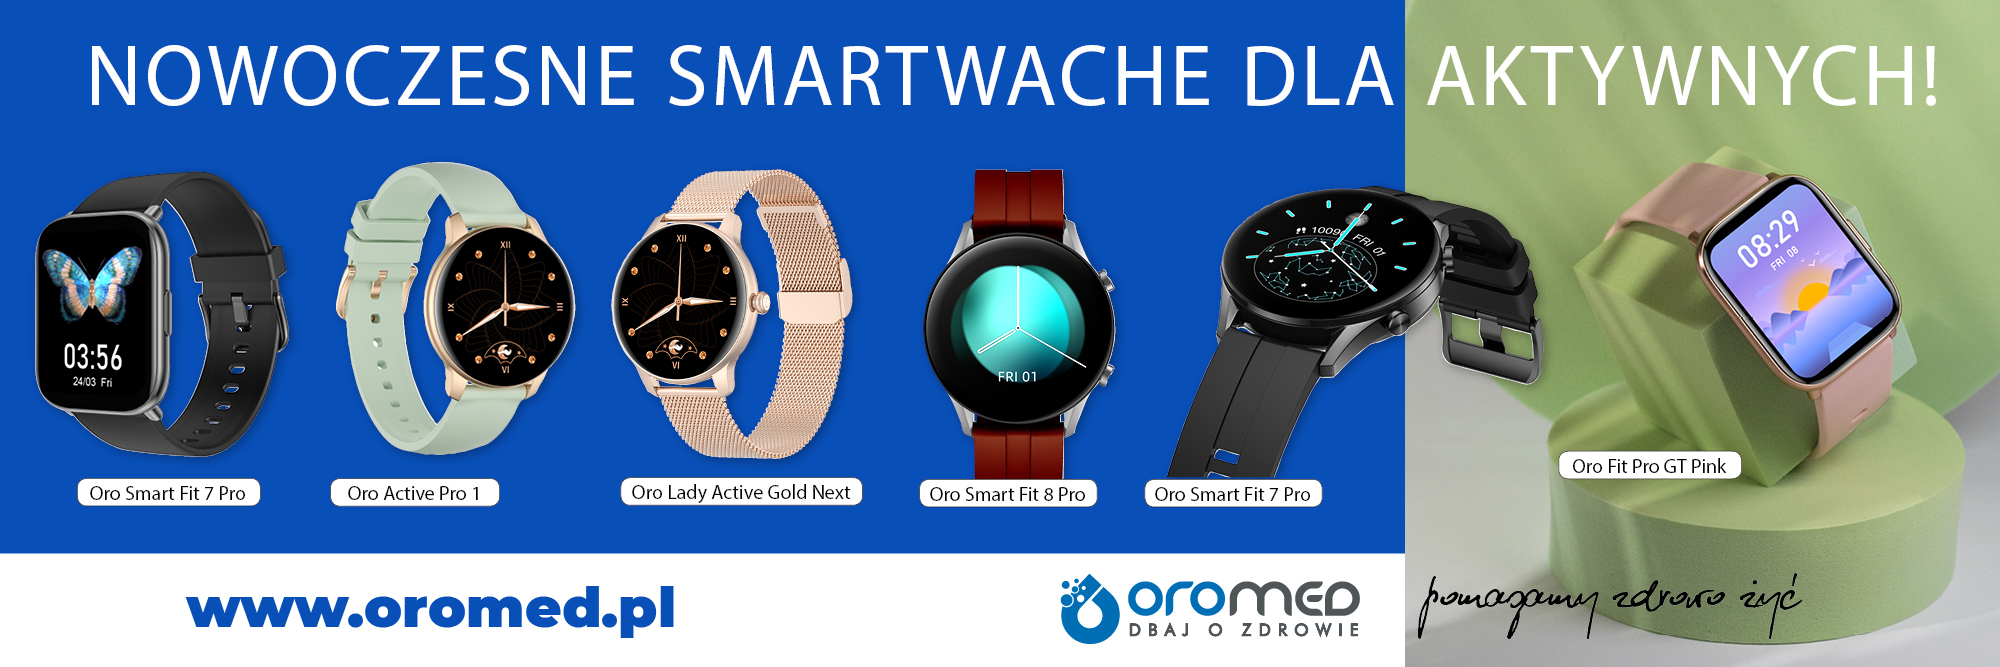 Oromed_smartwatch-RTV-www-3NS05